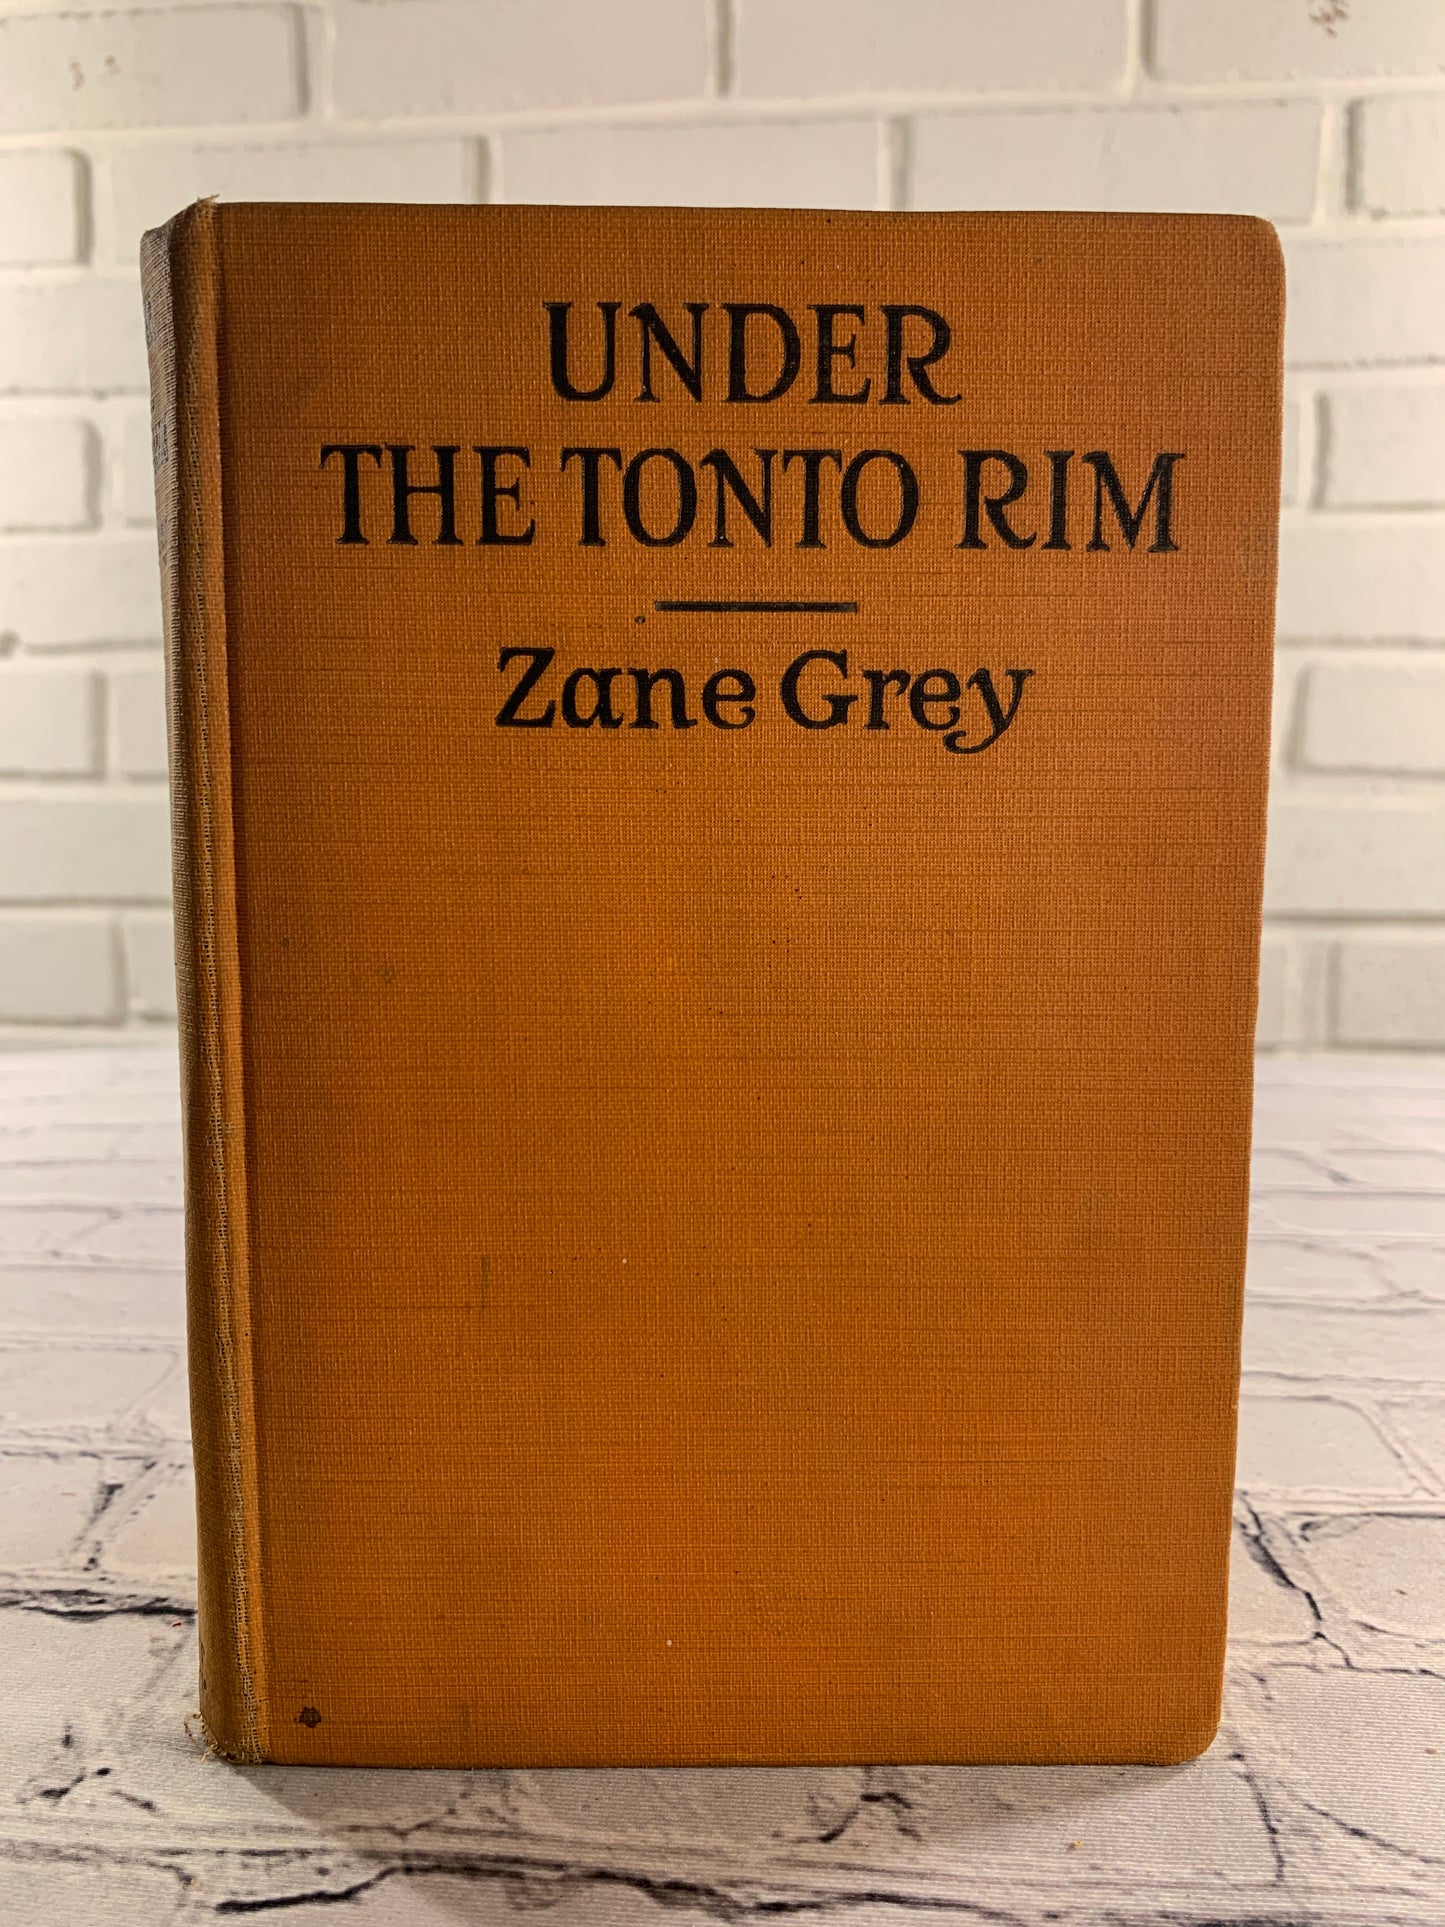 Under the Tonto Rim by Zane Grey [Grossett & Dunlap]